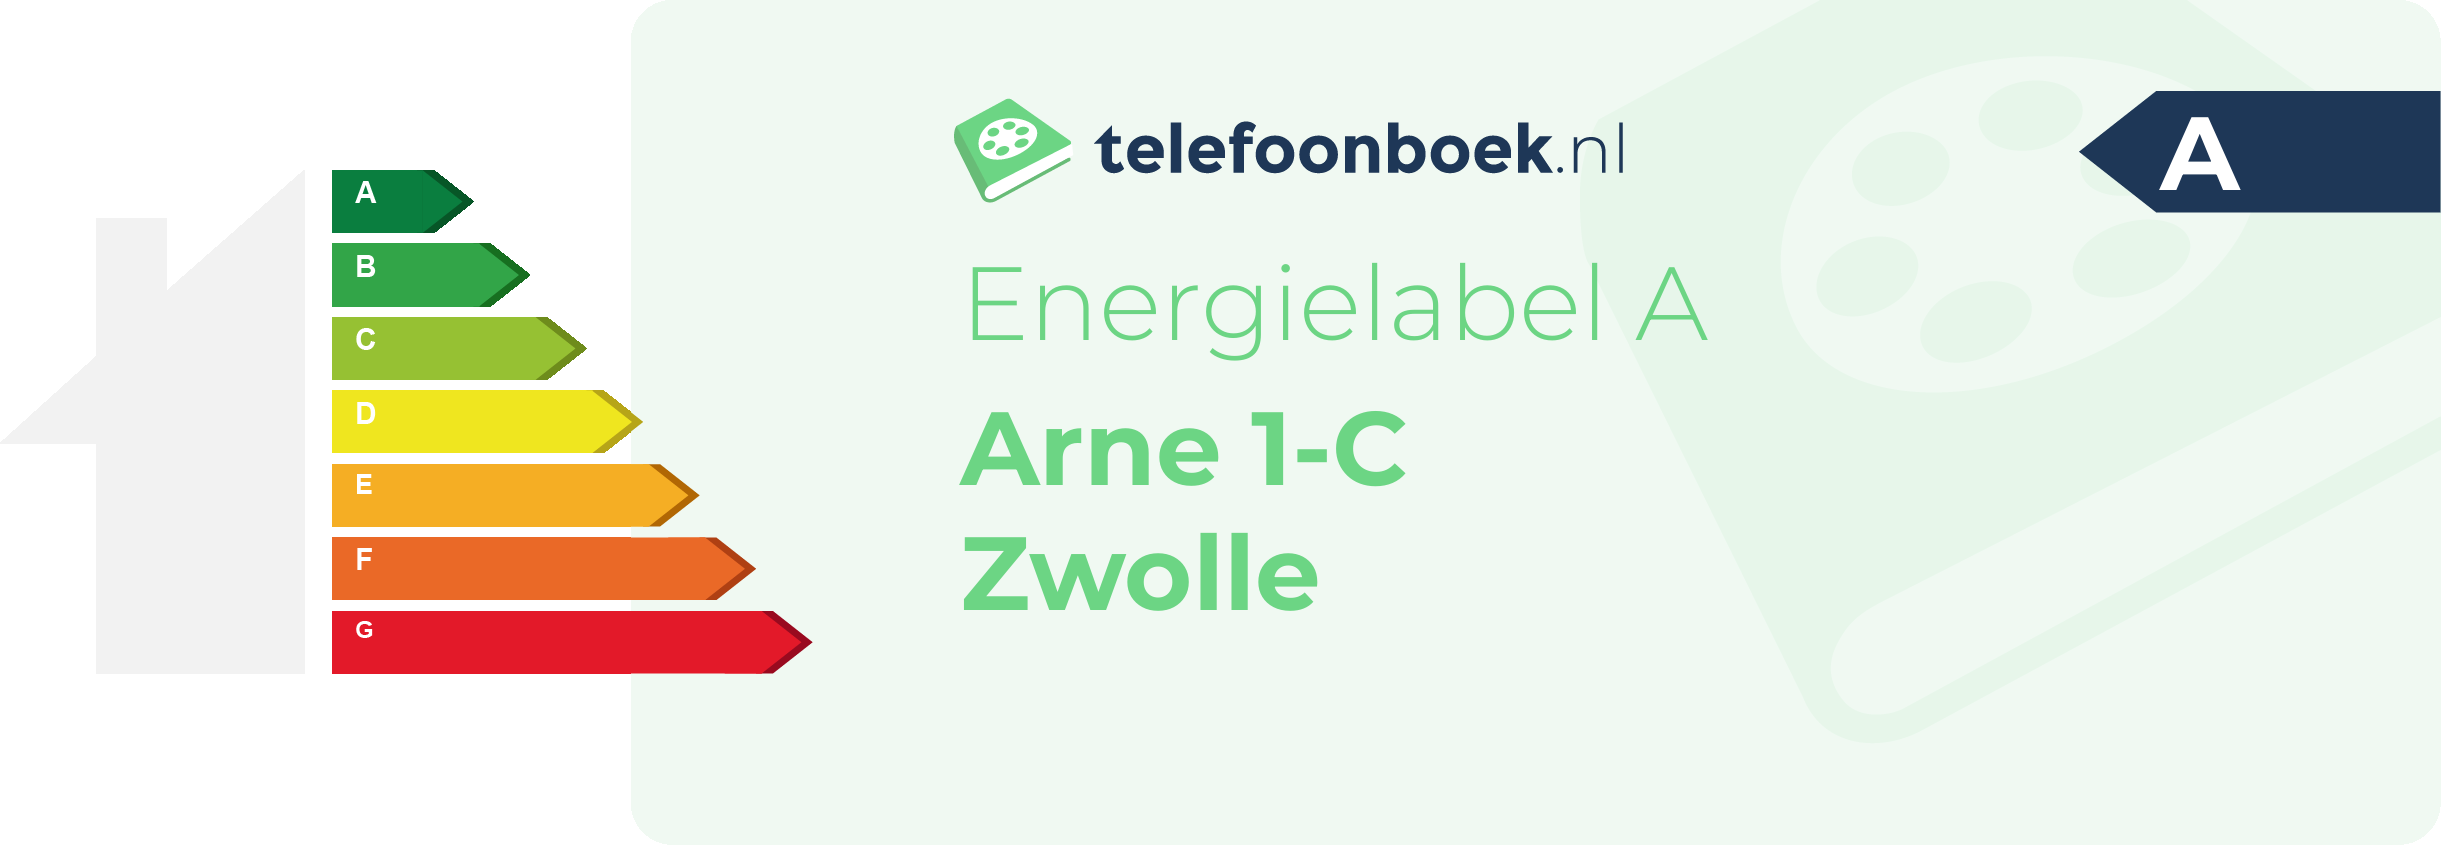 Energielabel Arne 1-C Zwolle